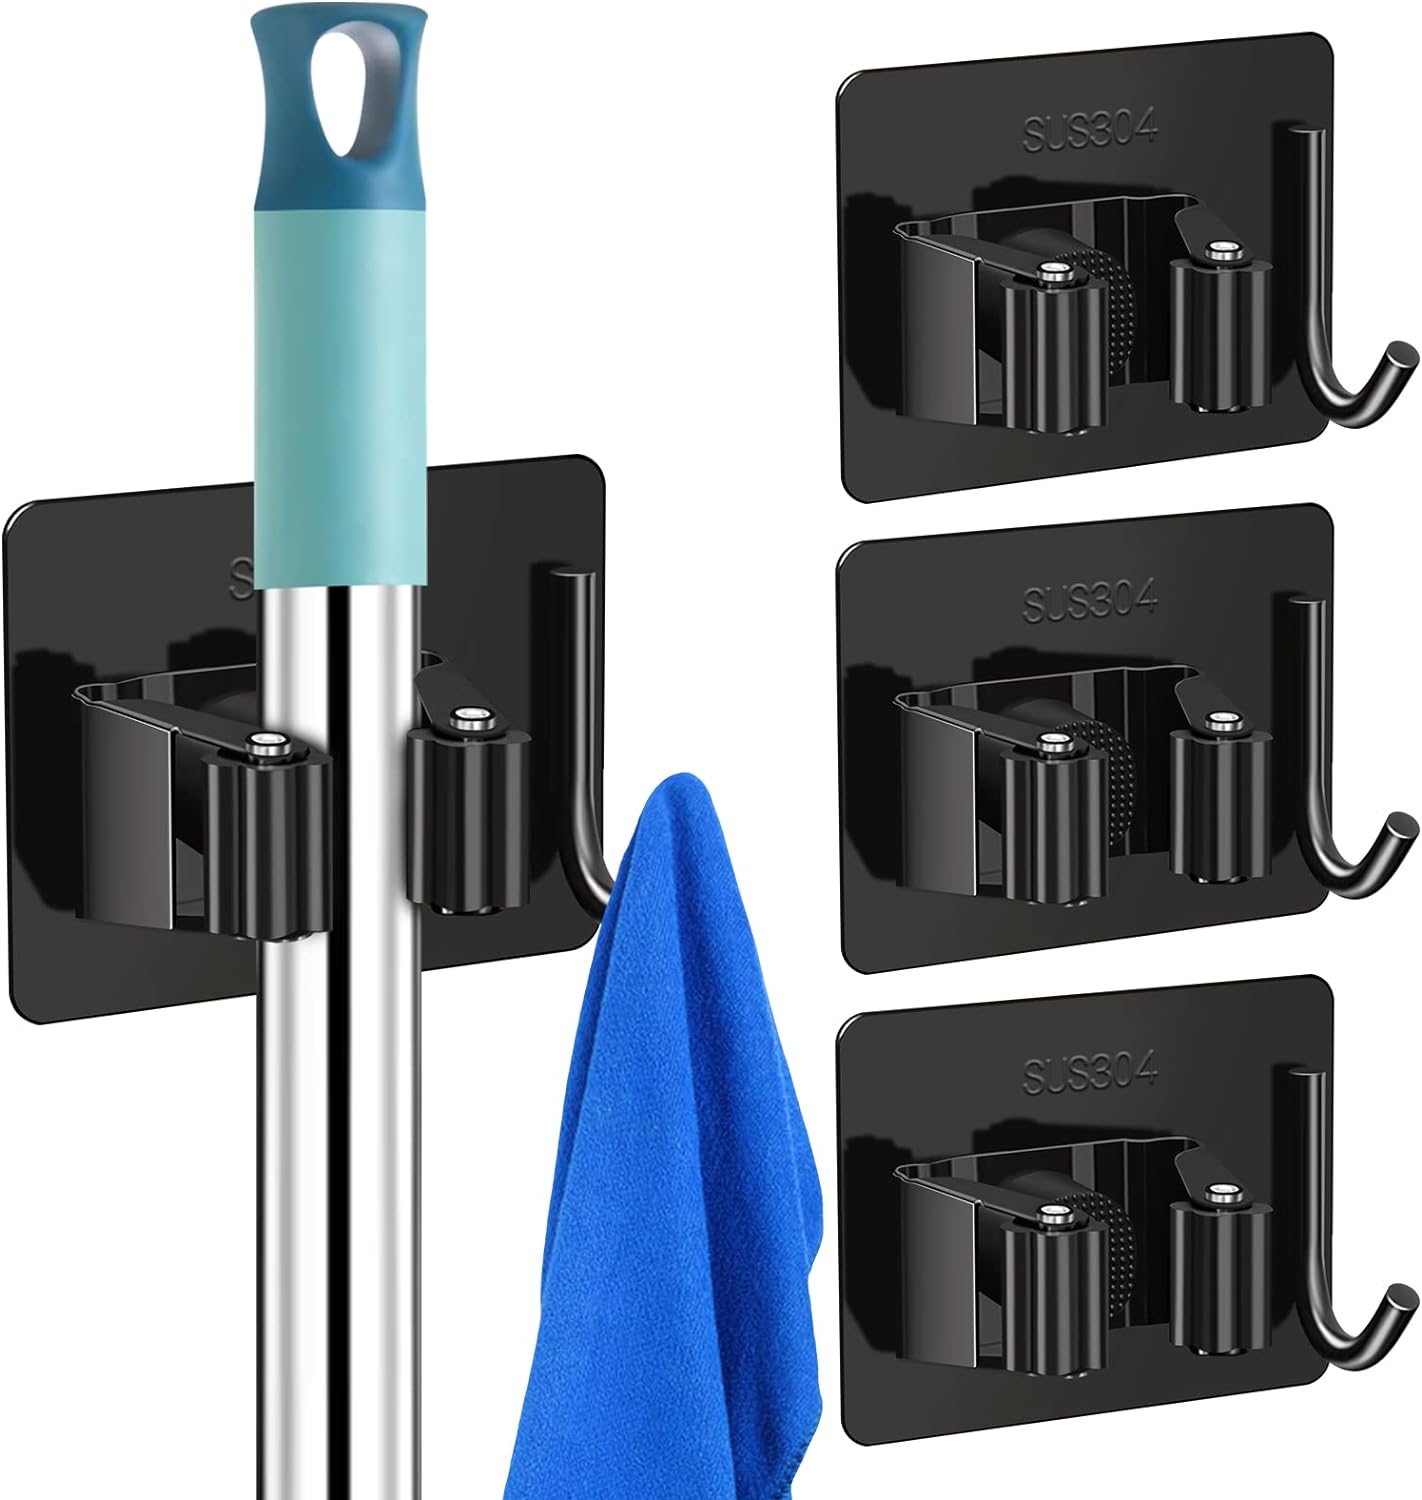 Self Adhesive Mop Holder Wall Mounted Hooks Broom Hanger Clip Hook Home Decor UK 